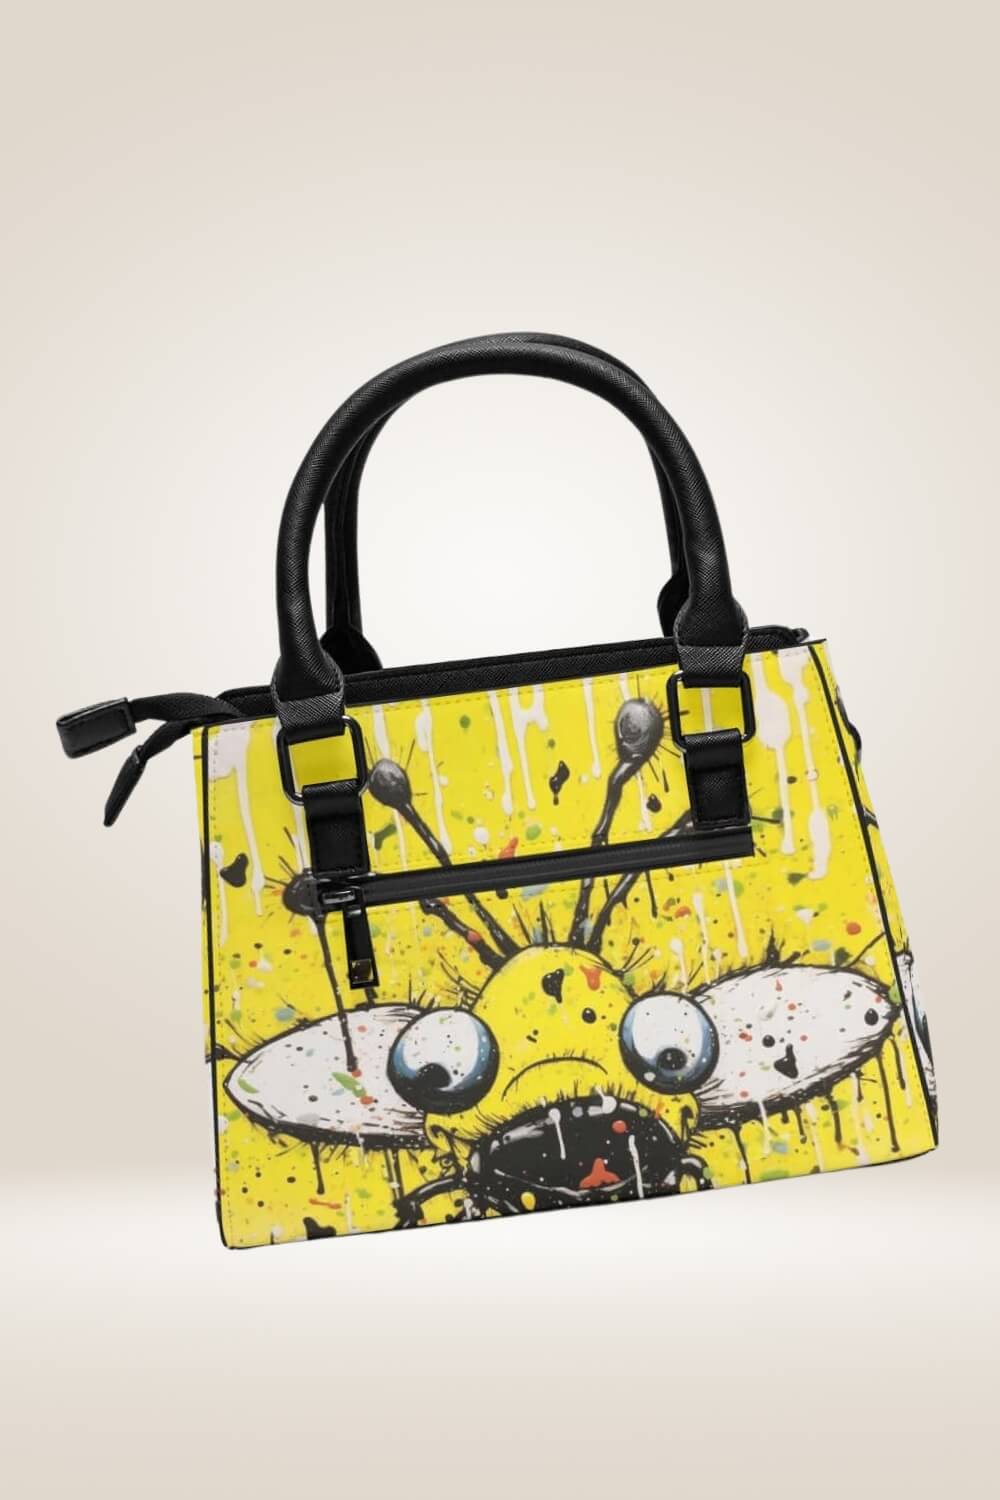 Cartoon Bug Yellow Satchel Bag - TGC Boutique - Satchel Handbag